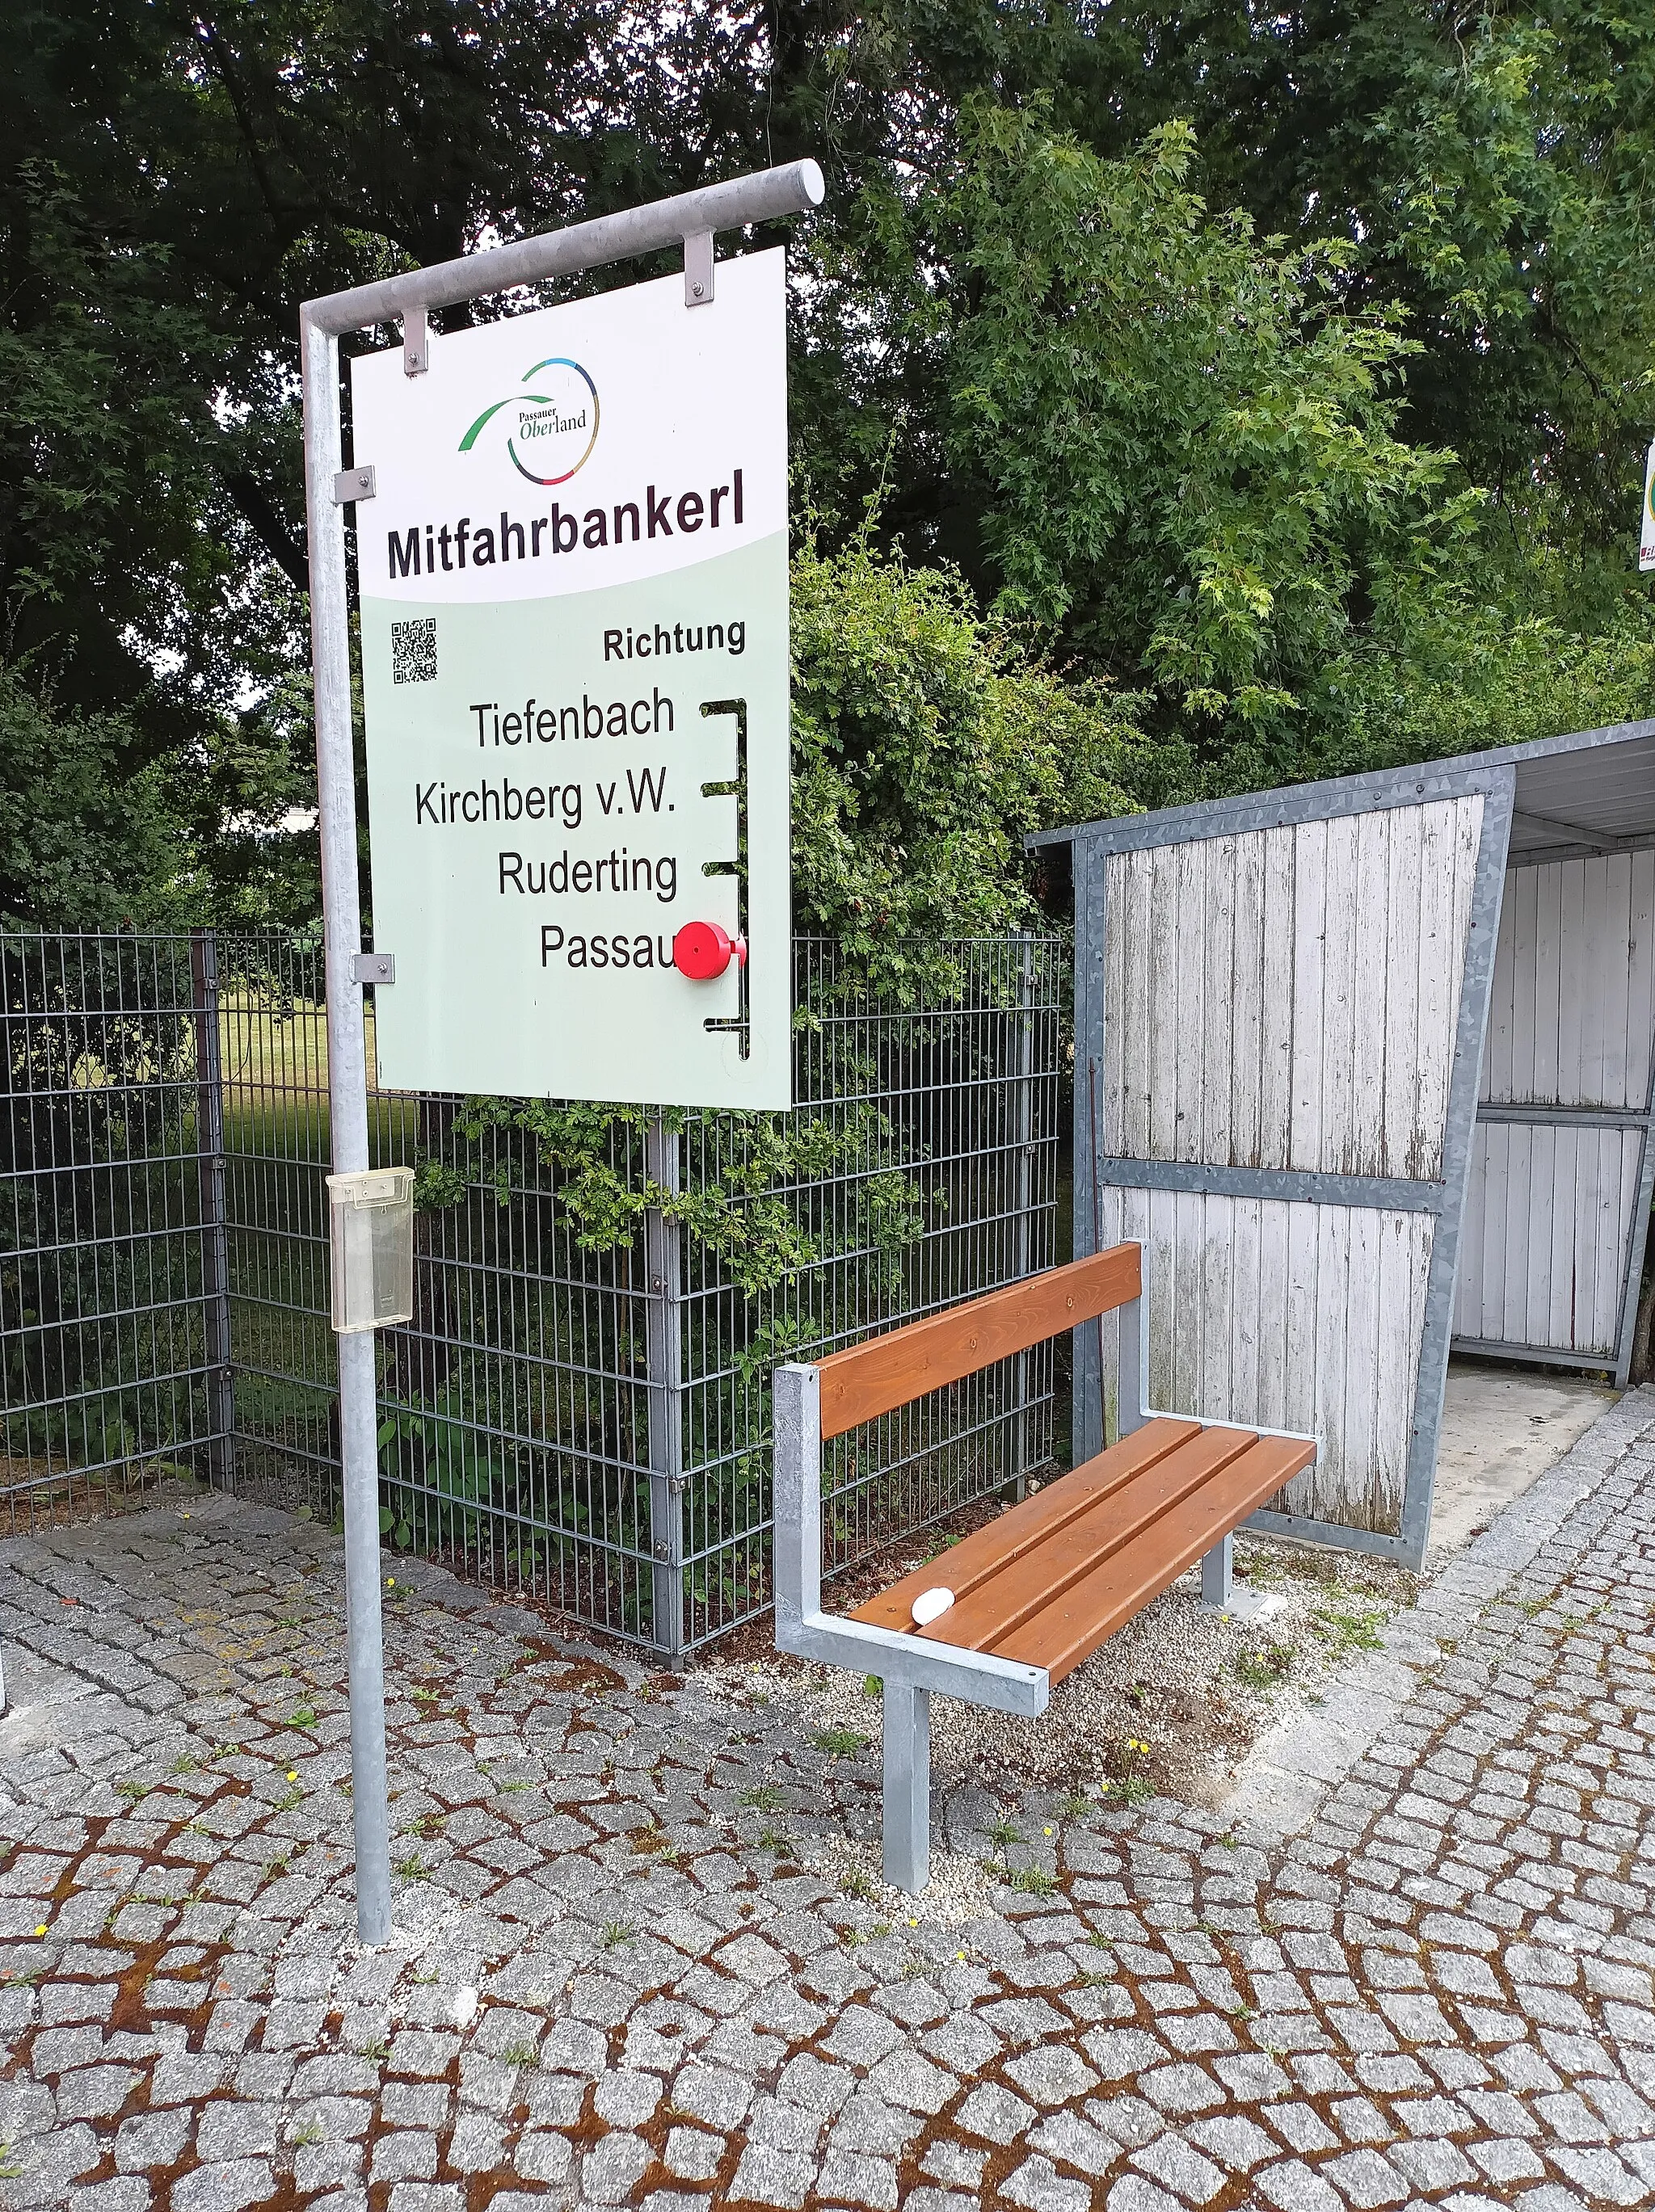 Photo showing: Mitfahrbankerl Richtungen: Tiefenbach. Kirchberg v.W., Ruderting, Passau